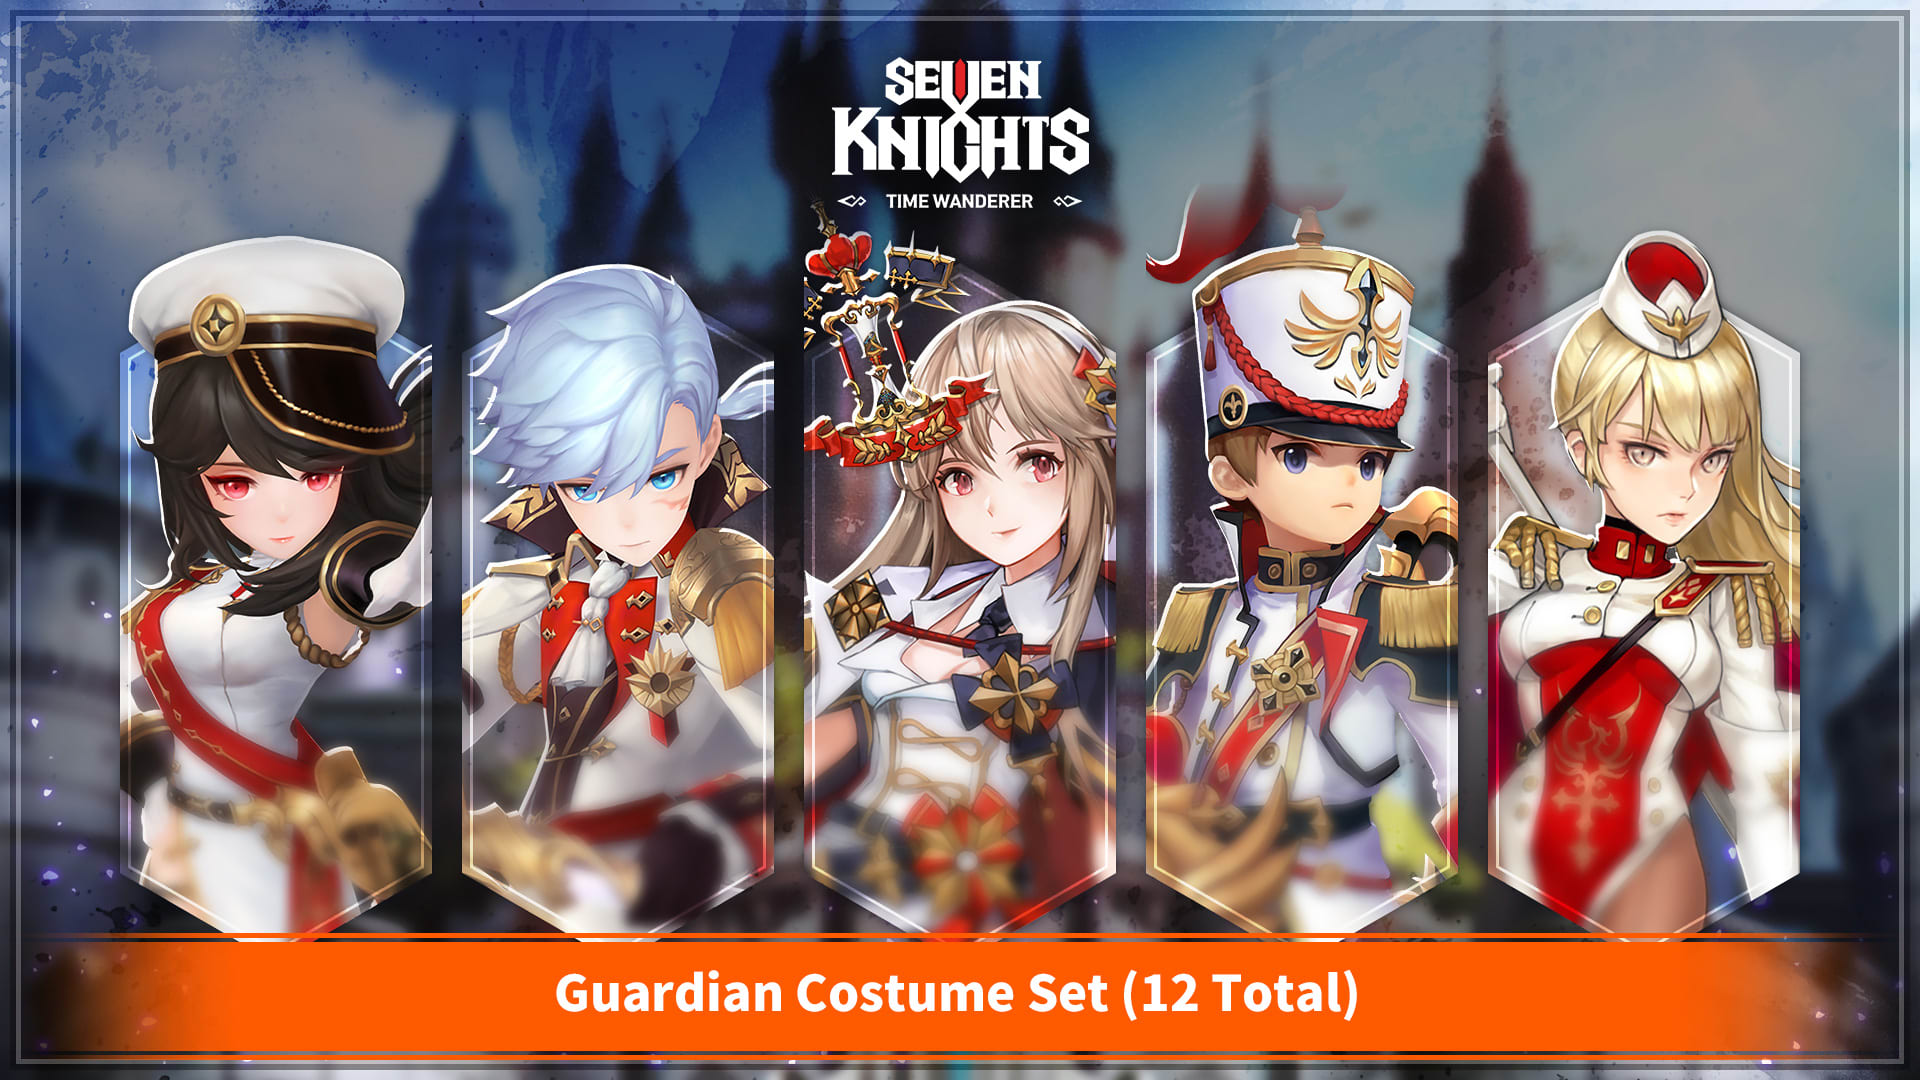 Guardian Costume Set (12 Total)